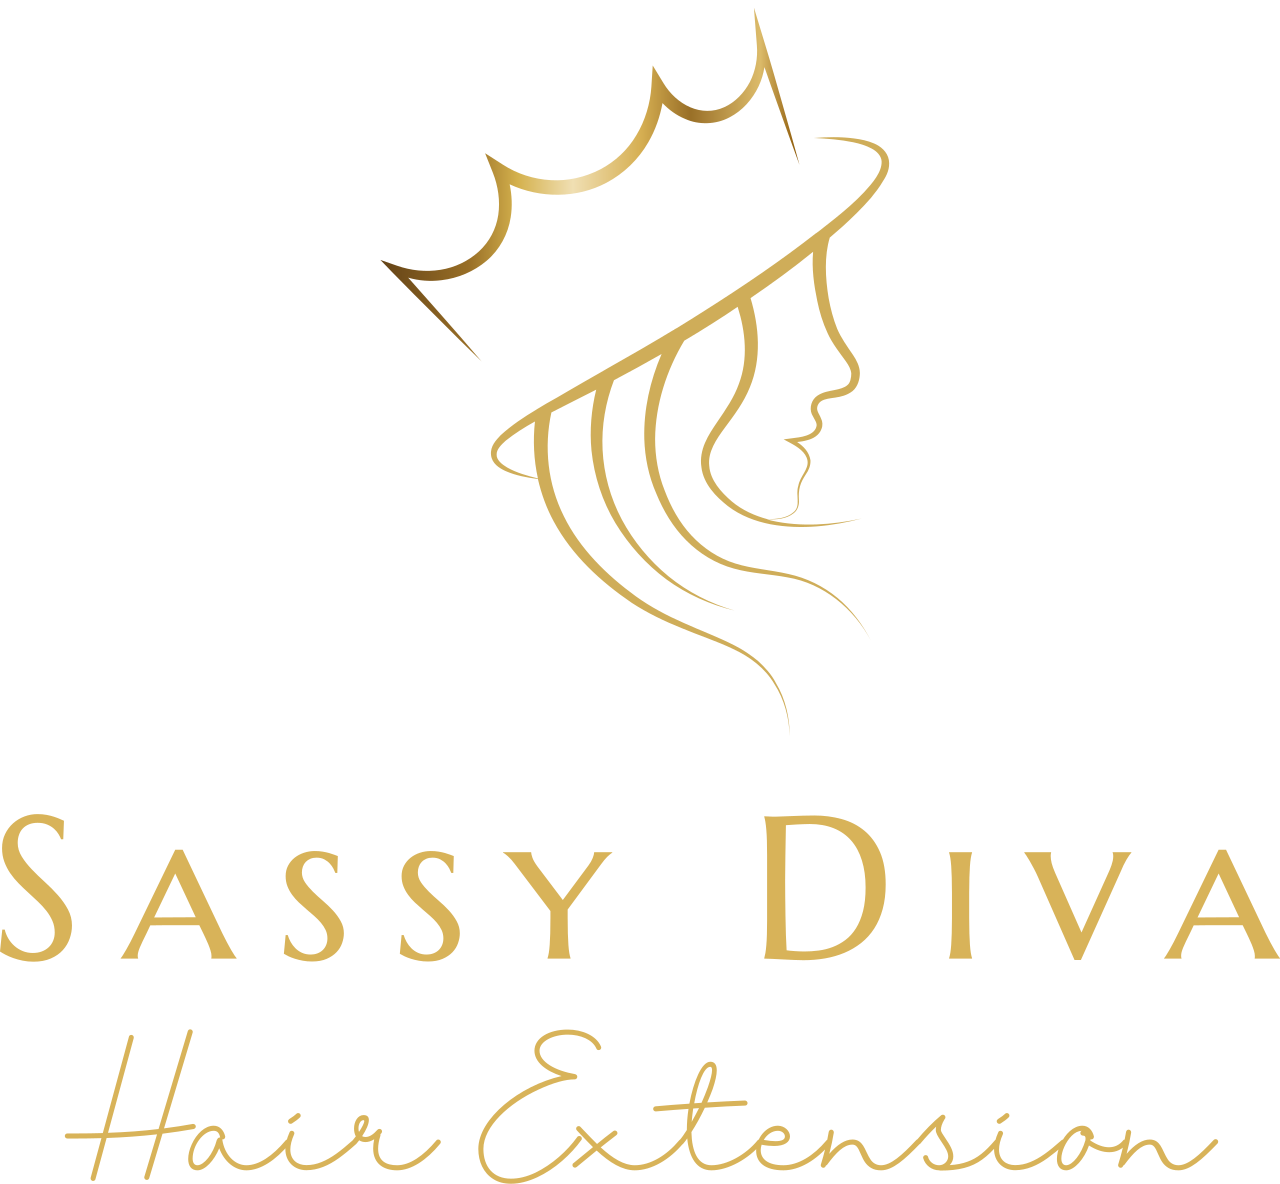 Sassy Diva's web page